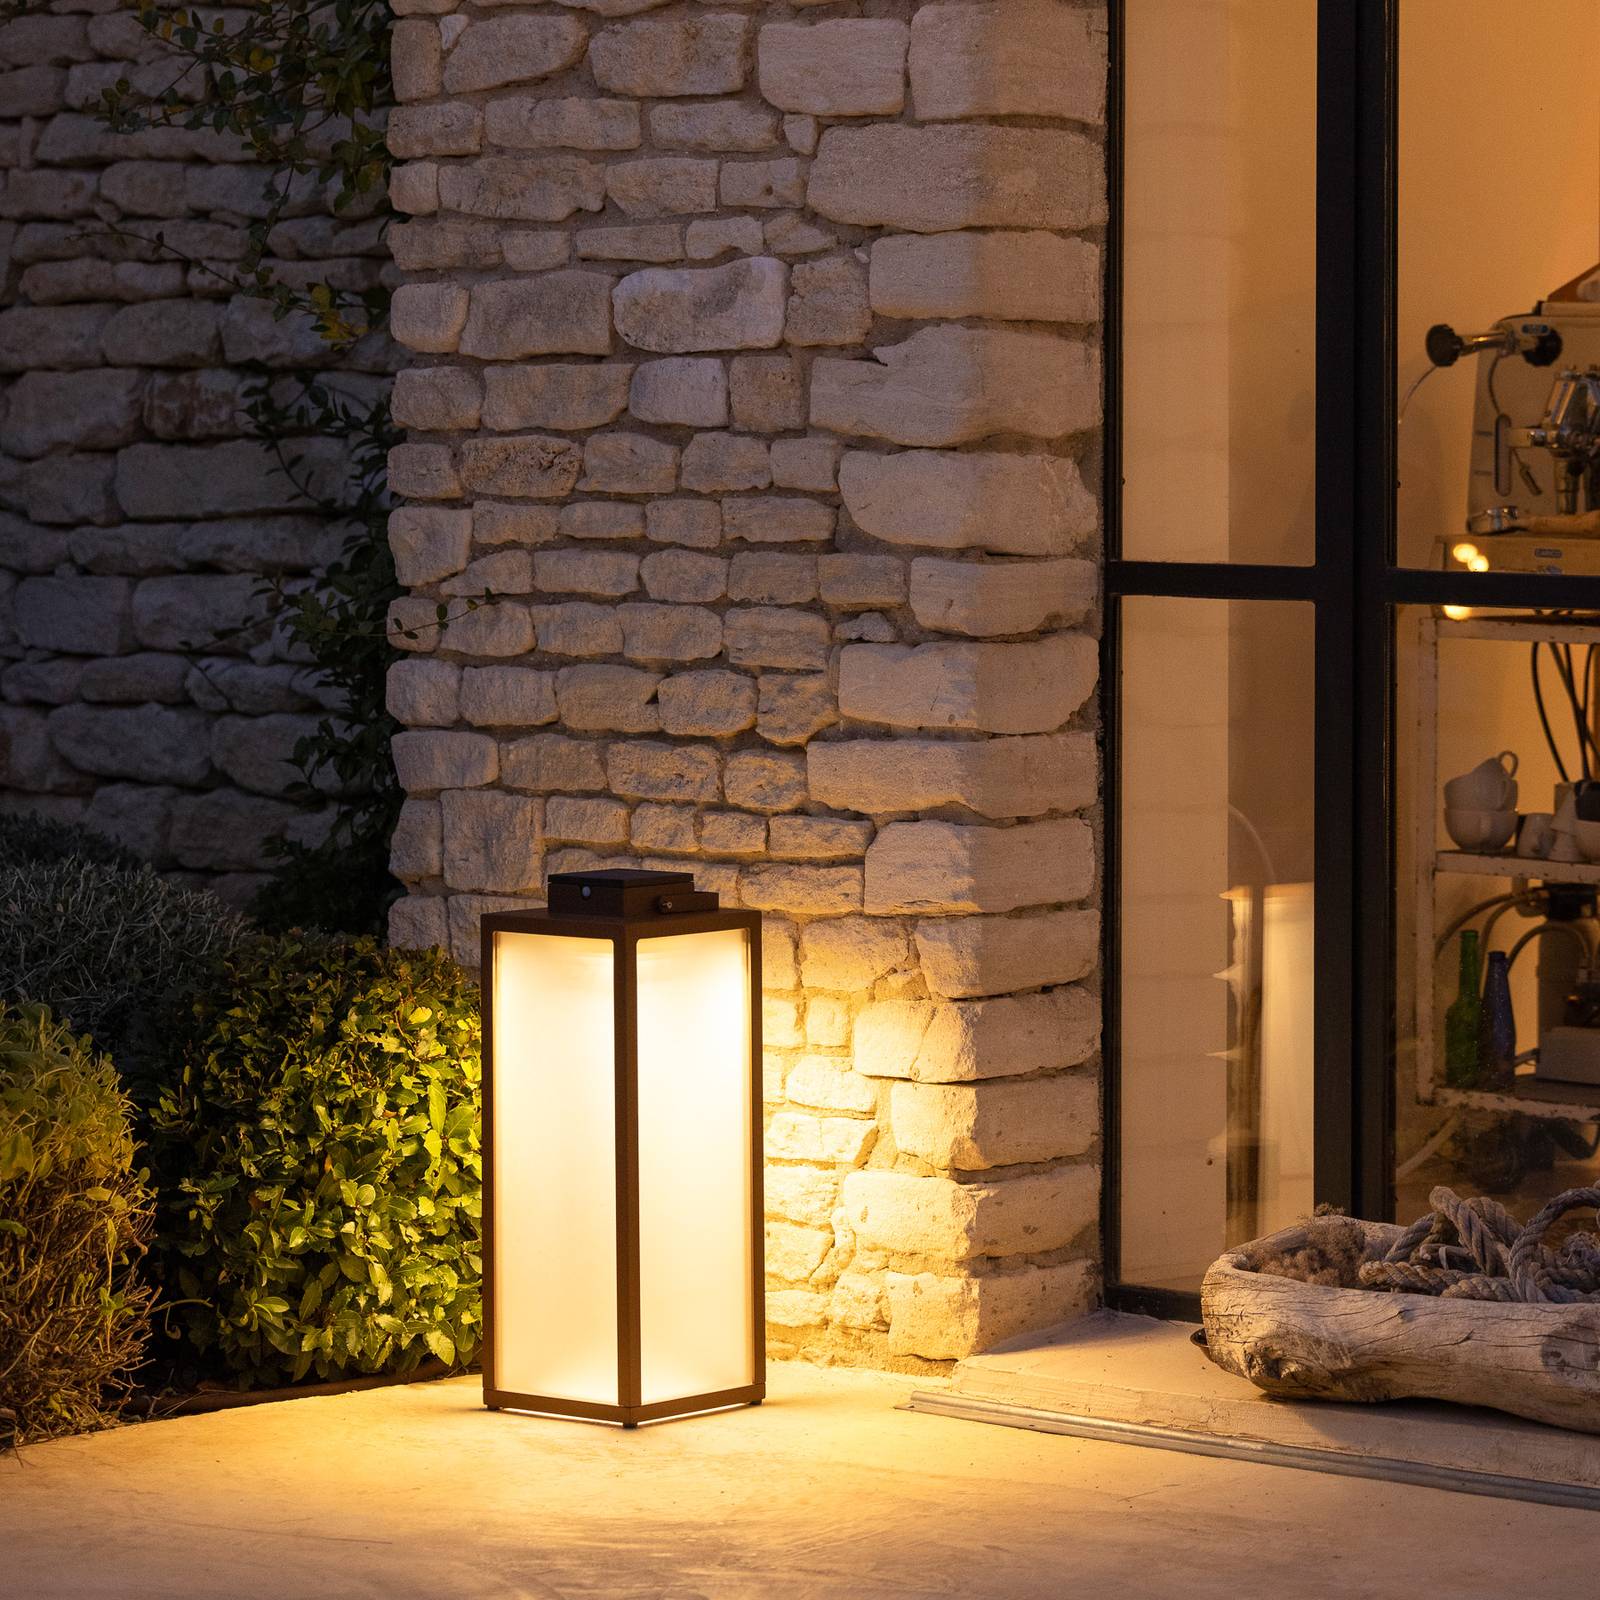 Les Jardins Tradition LED-solcellslanternin corten höjd 65 cm